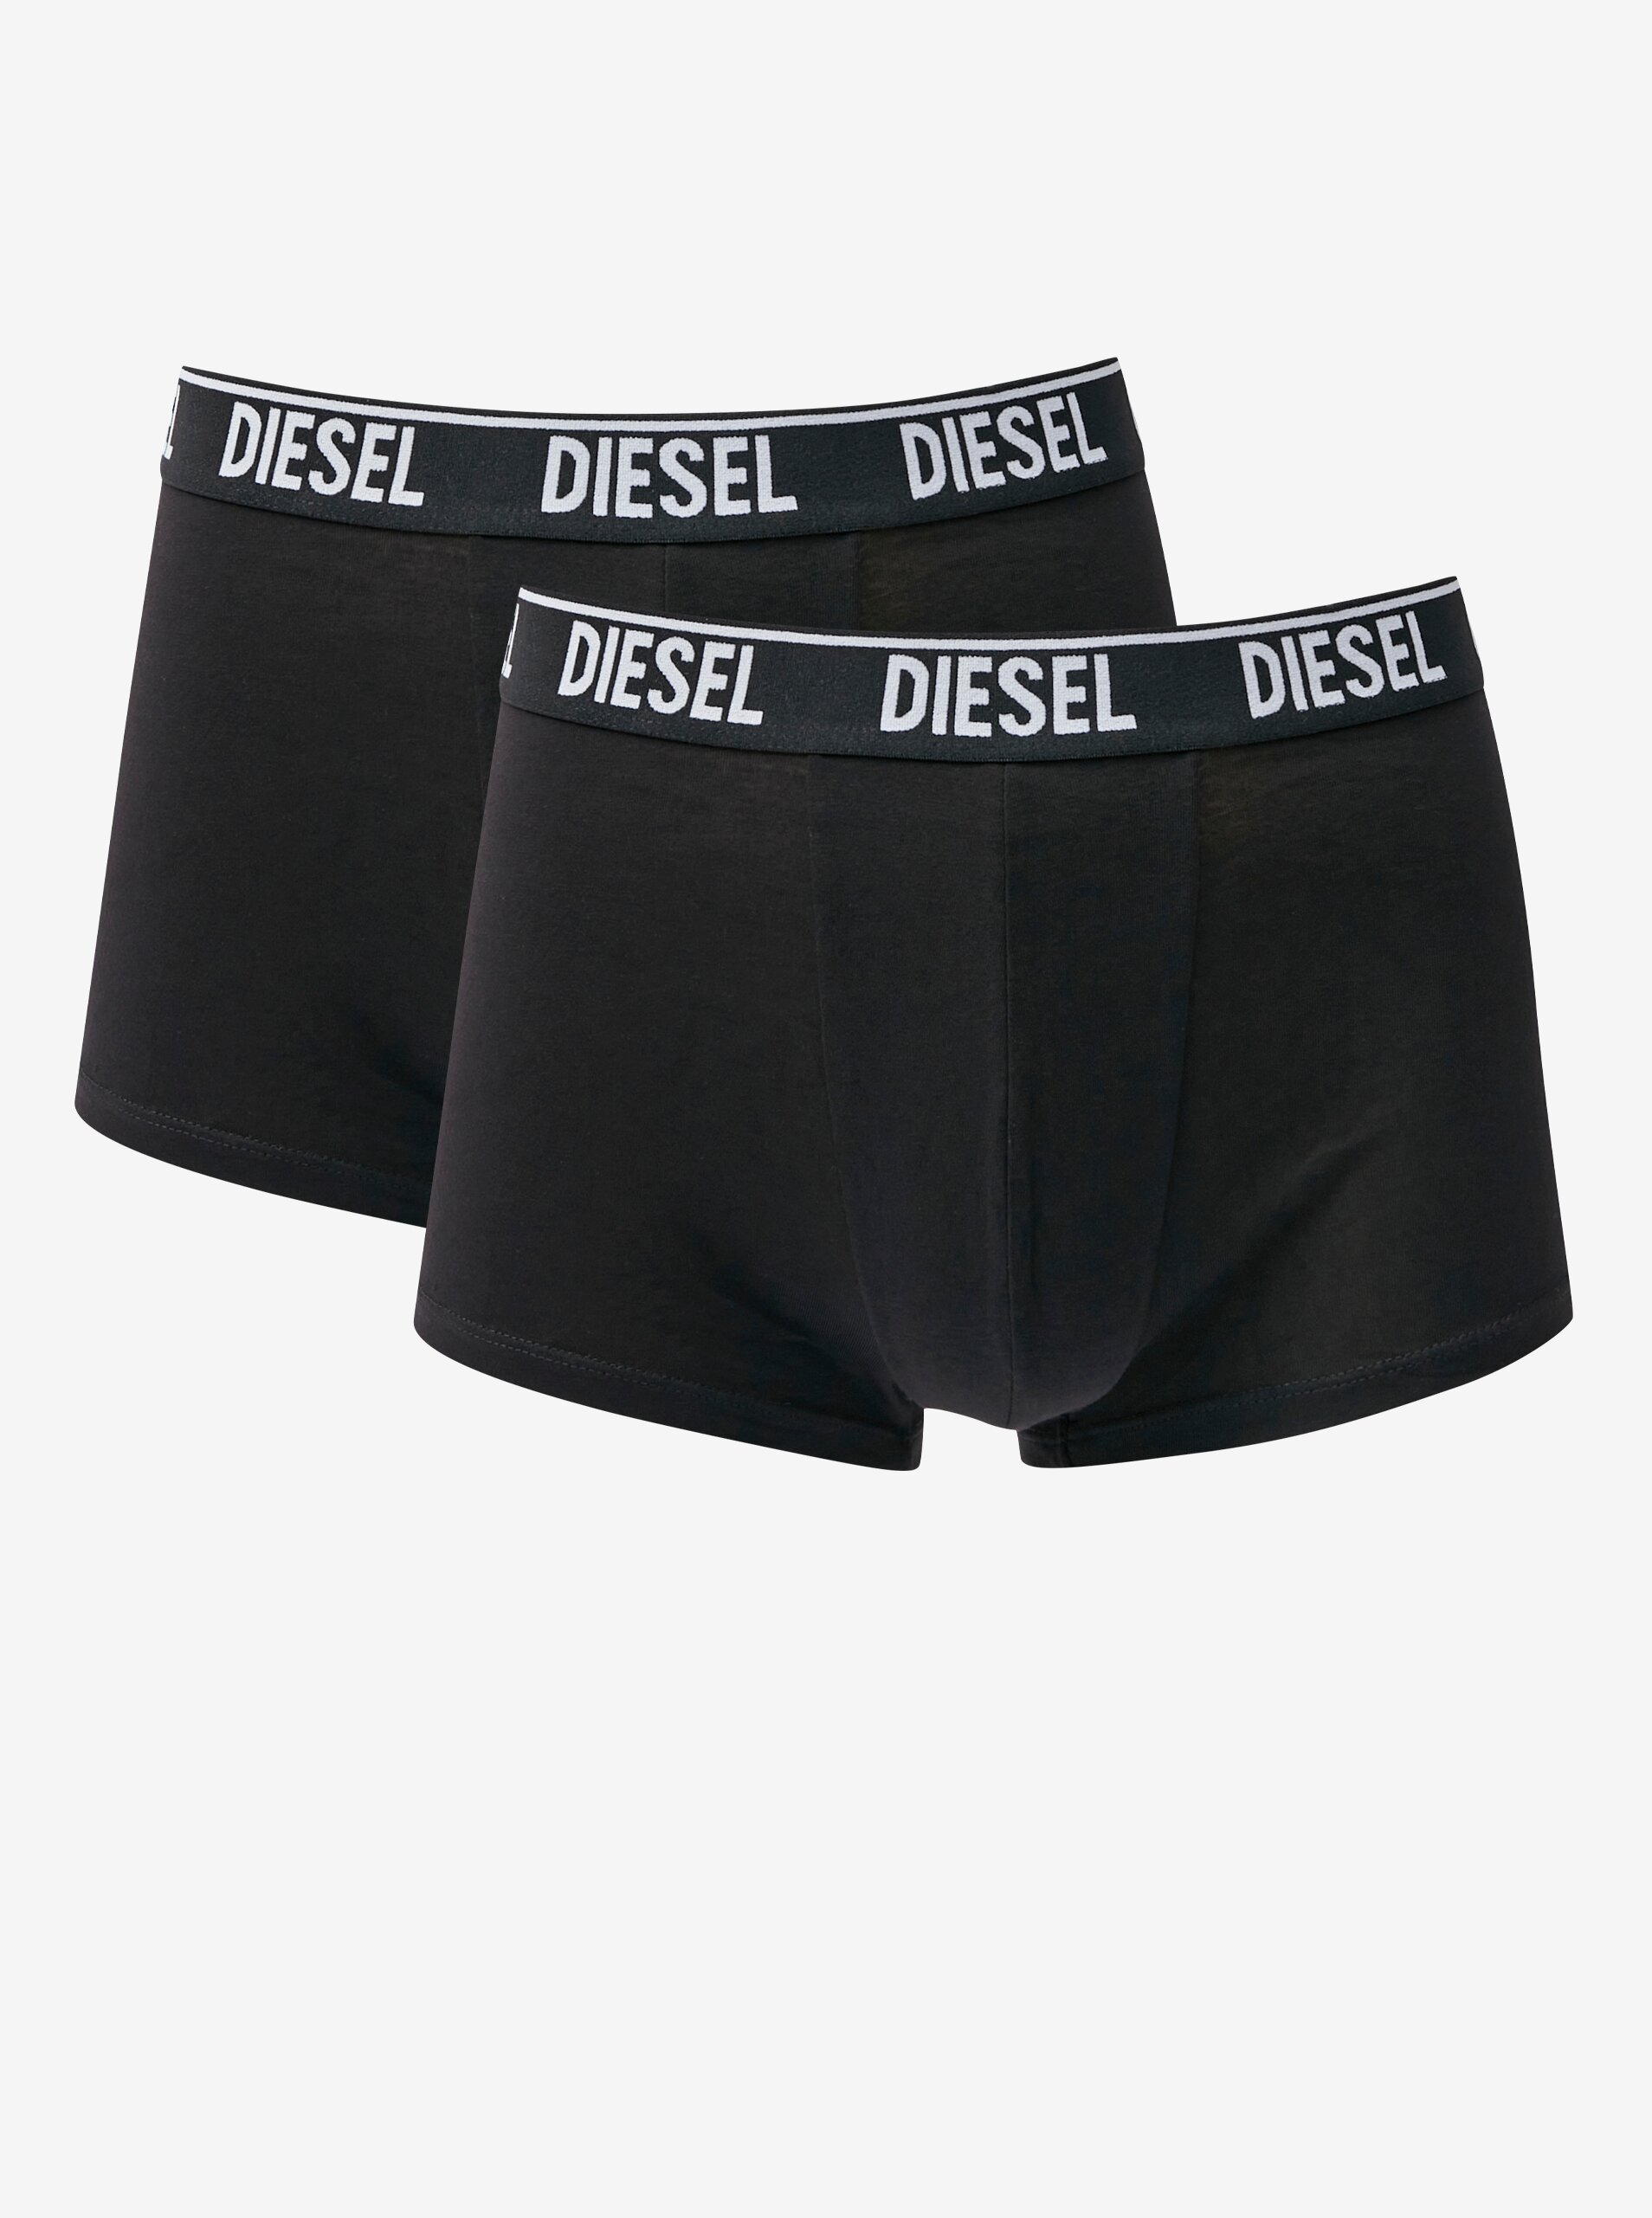 Set of two men's boxer shorts in black Diesel - Men